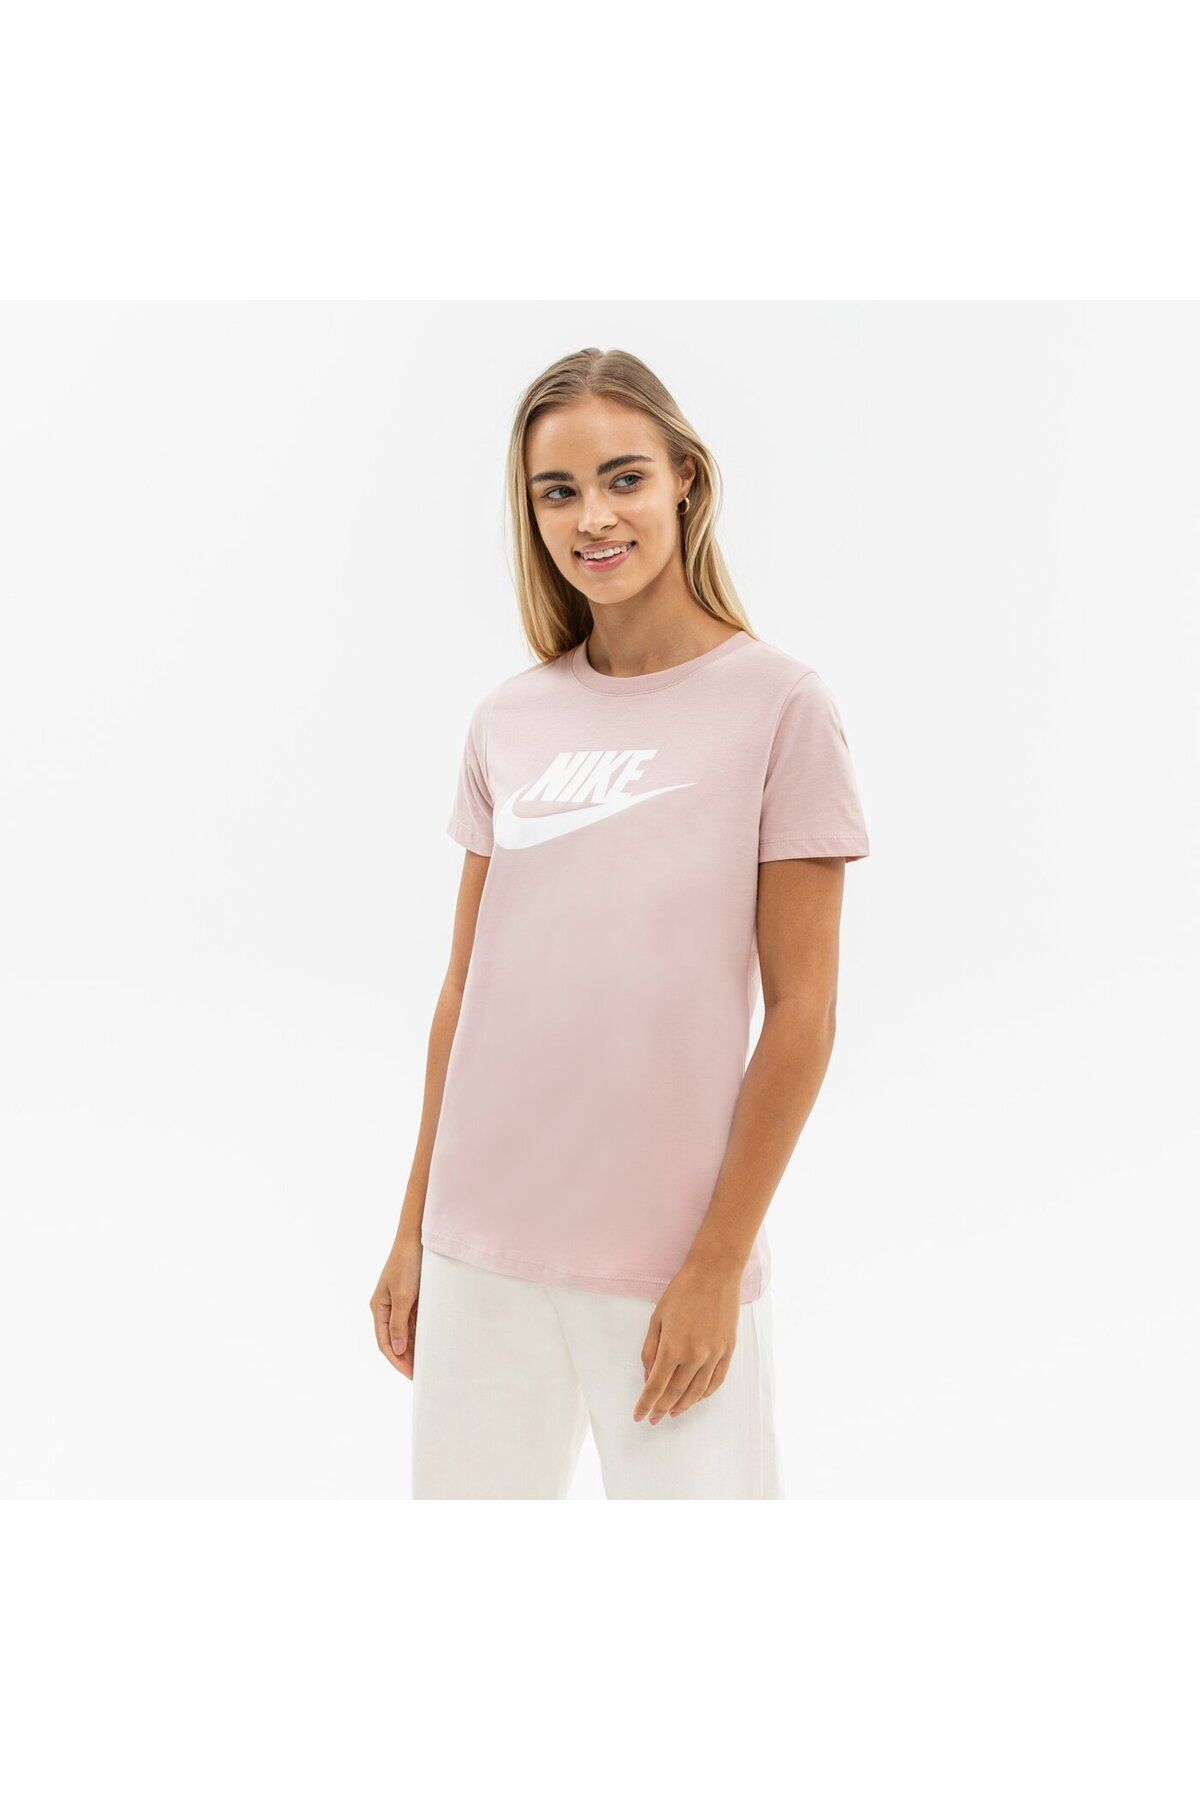 Nike T-SHIRT SS SPOR ESSENTIAL Kadın Pembe Günlük Rahat T-shirt